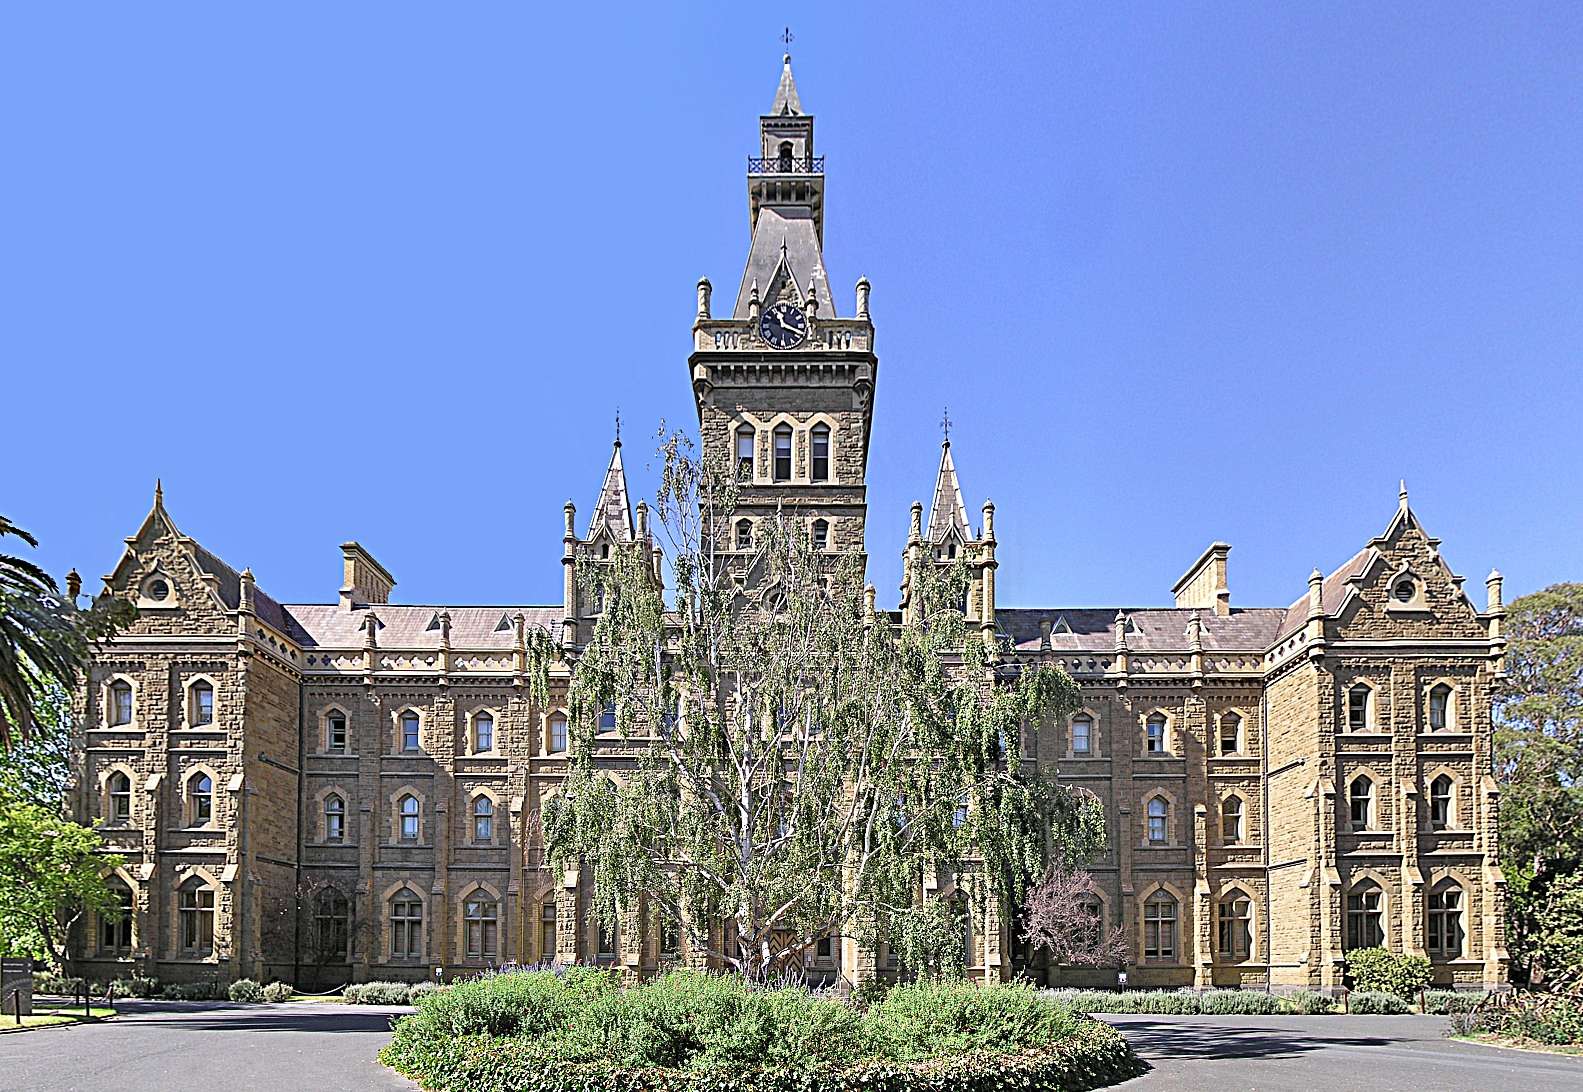 University of Melbourne Scholarship